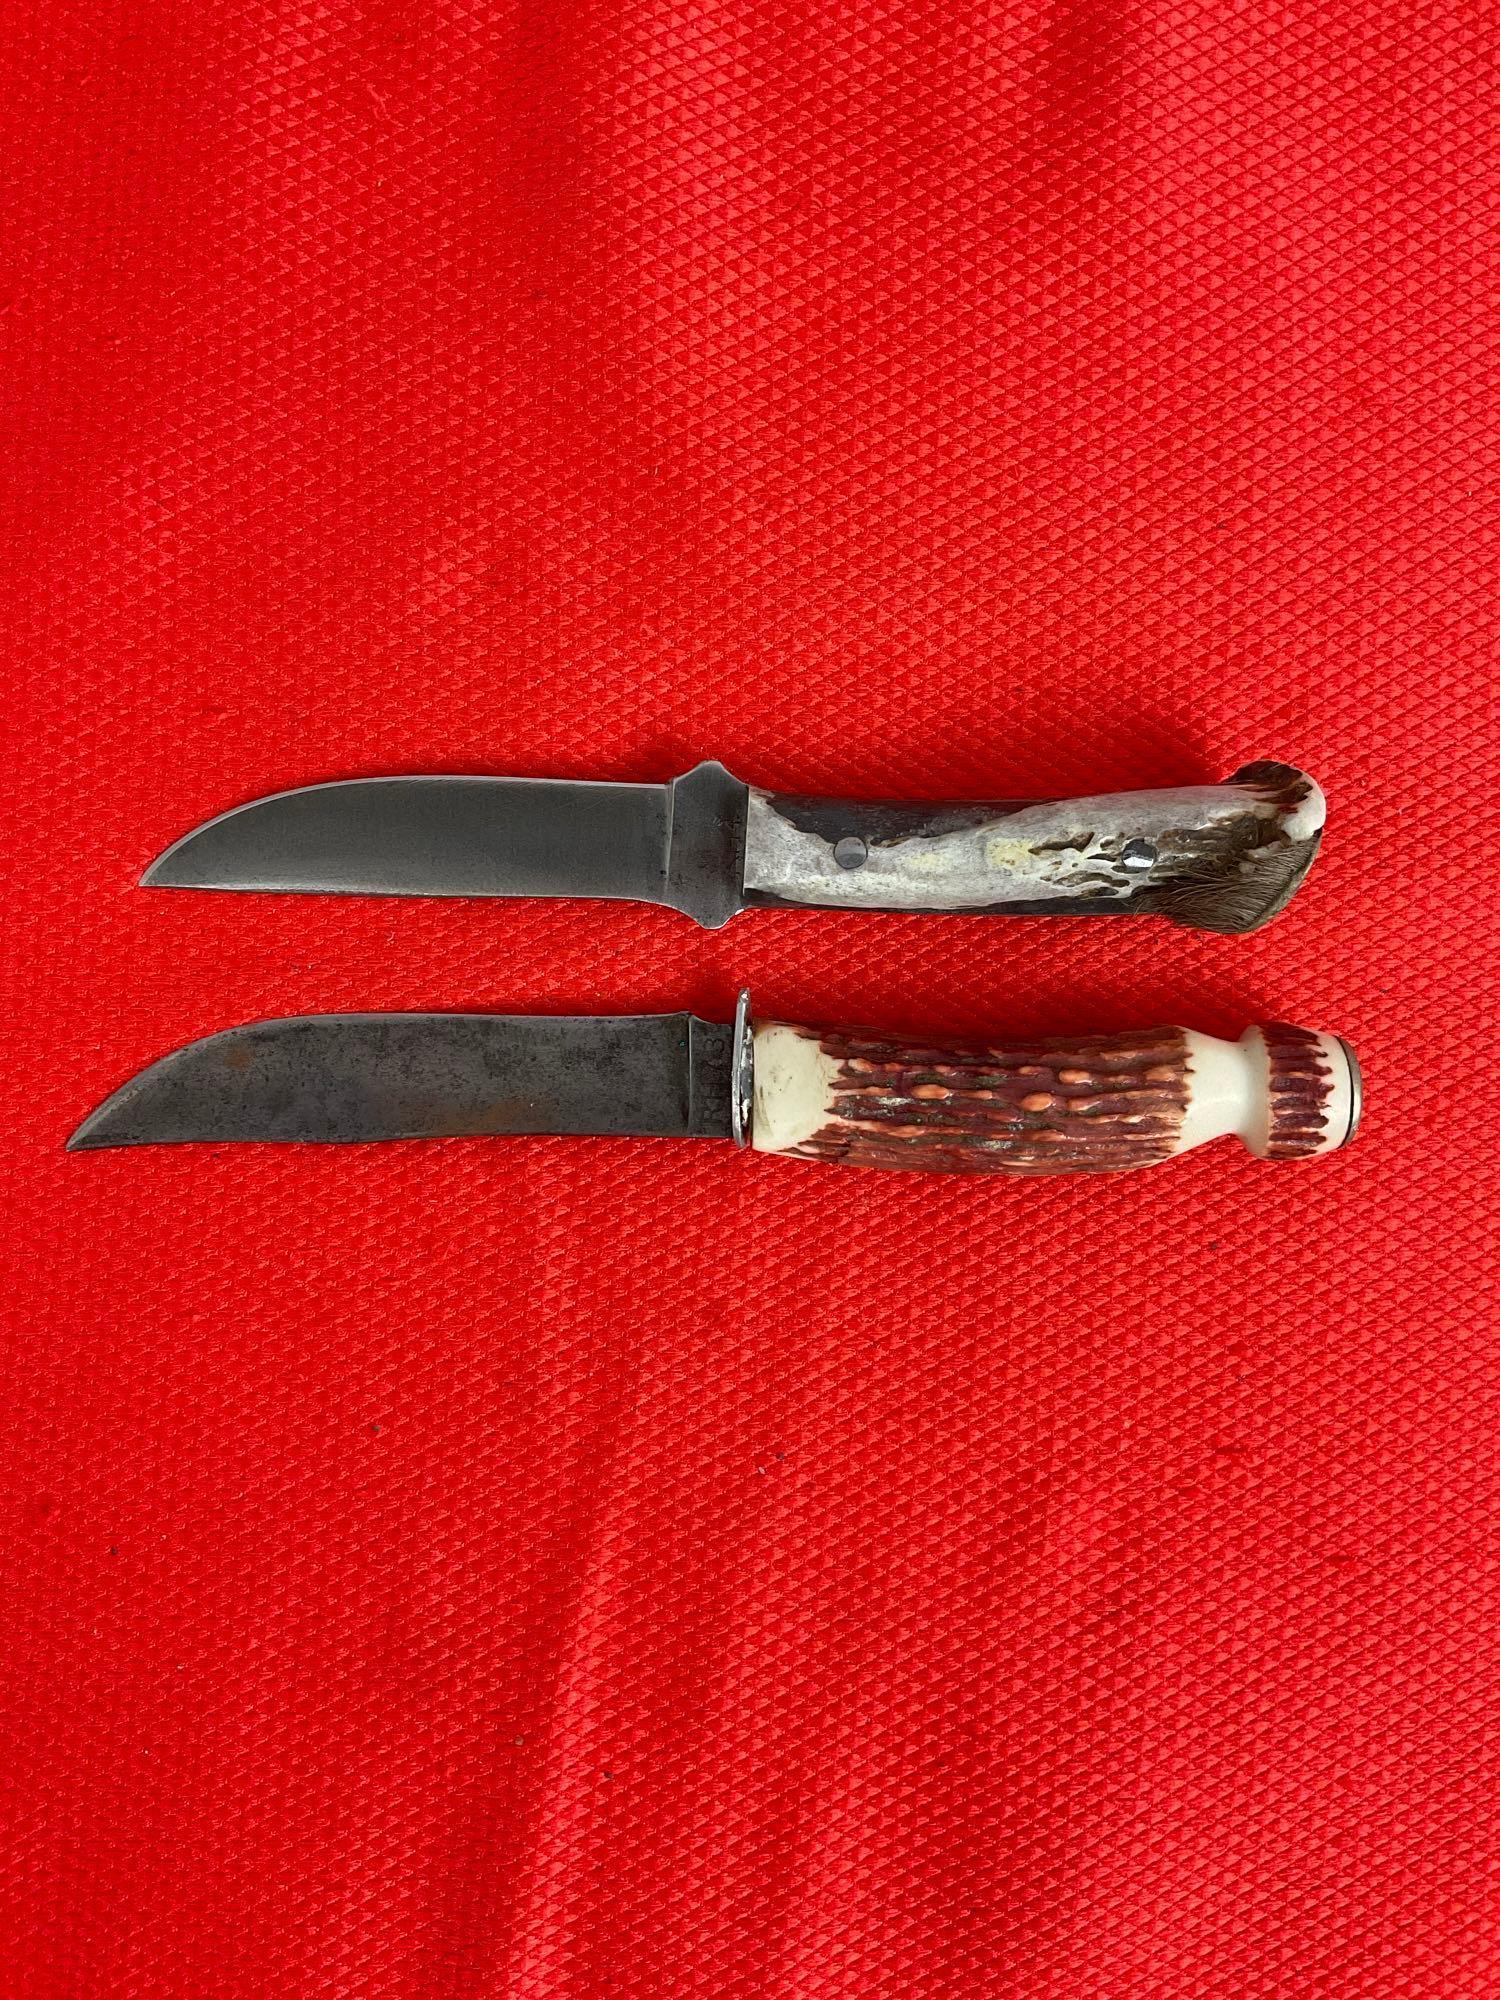 2 pcs Vintage Remington Steel Fixed Blade Hunting Knives Models RH3 & RH73. 1 Sheath. See pics.